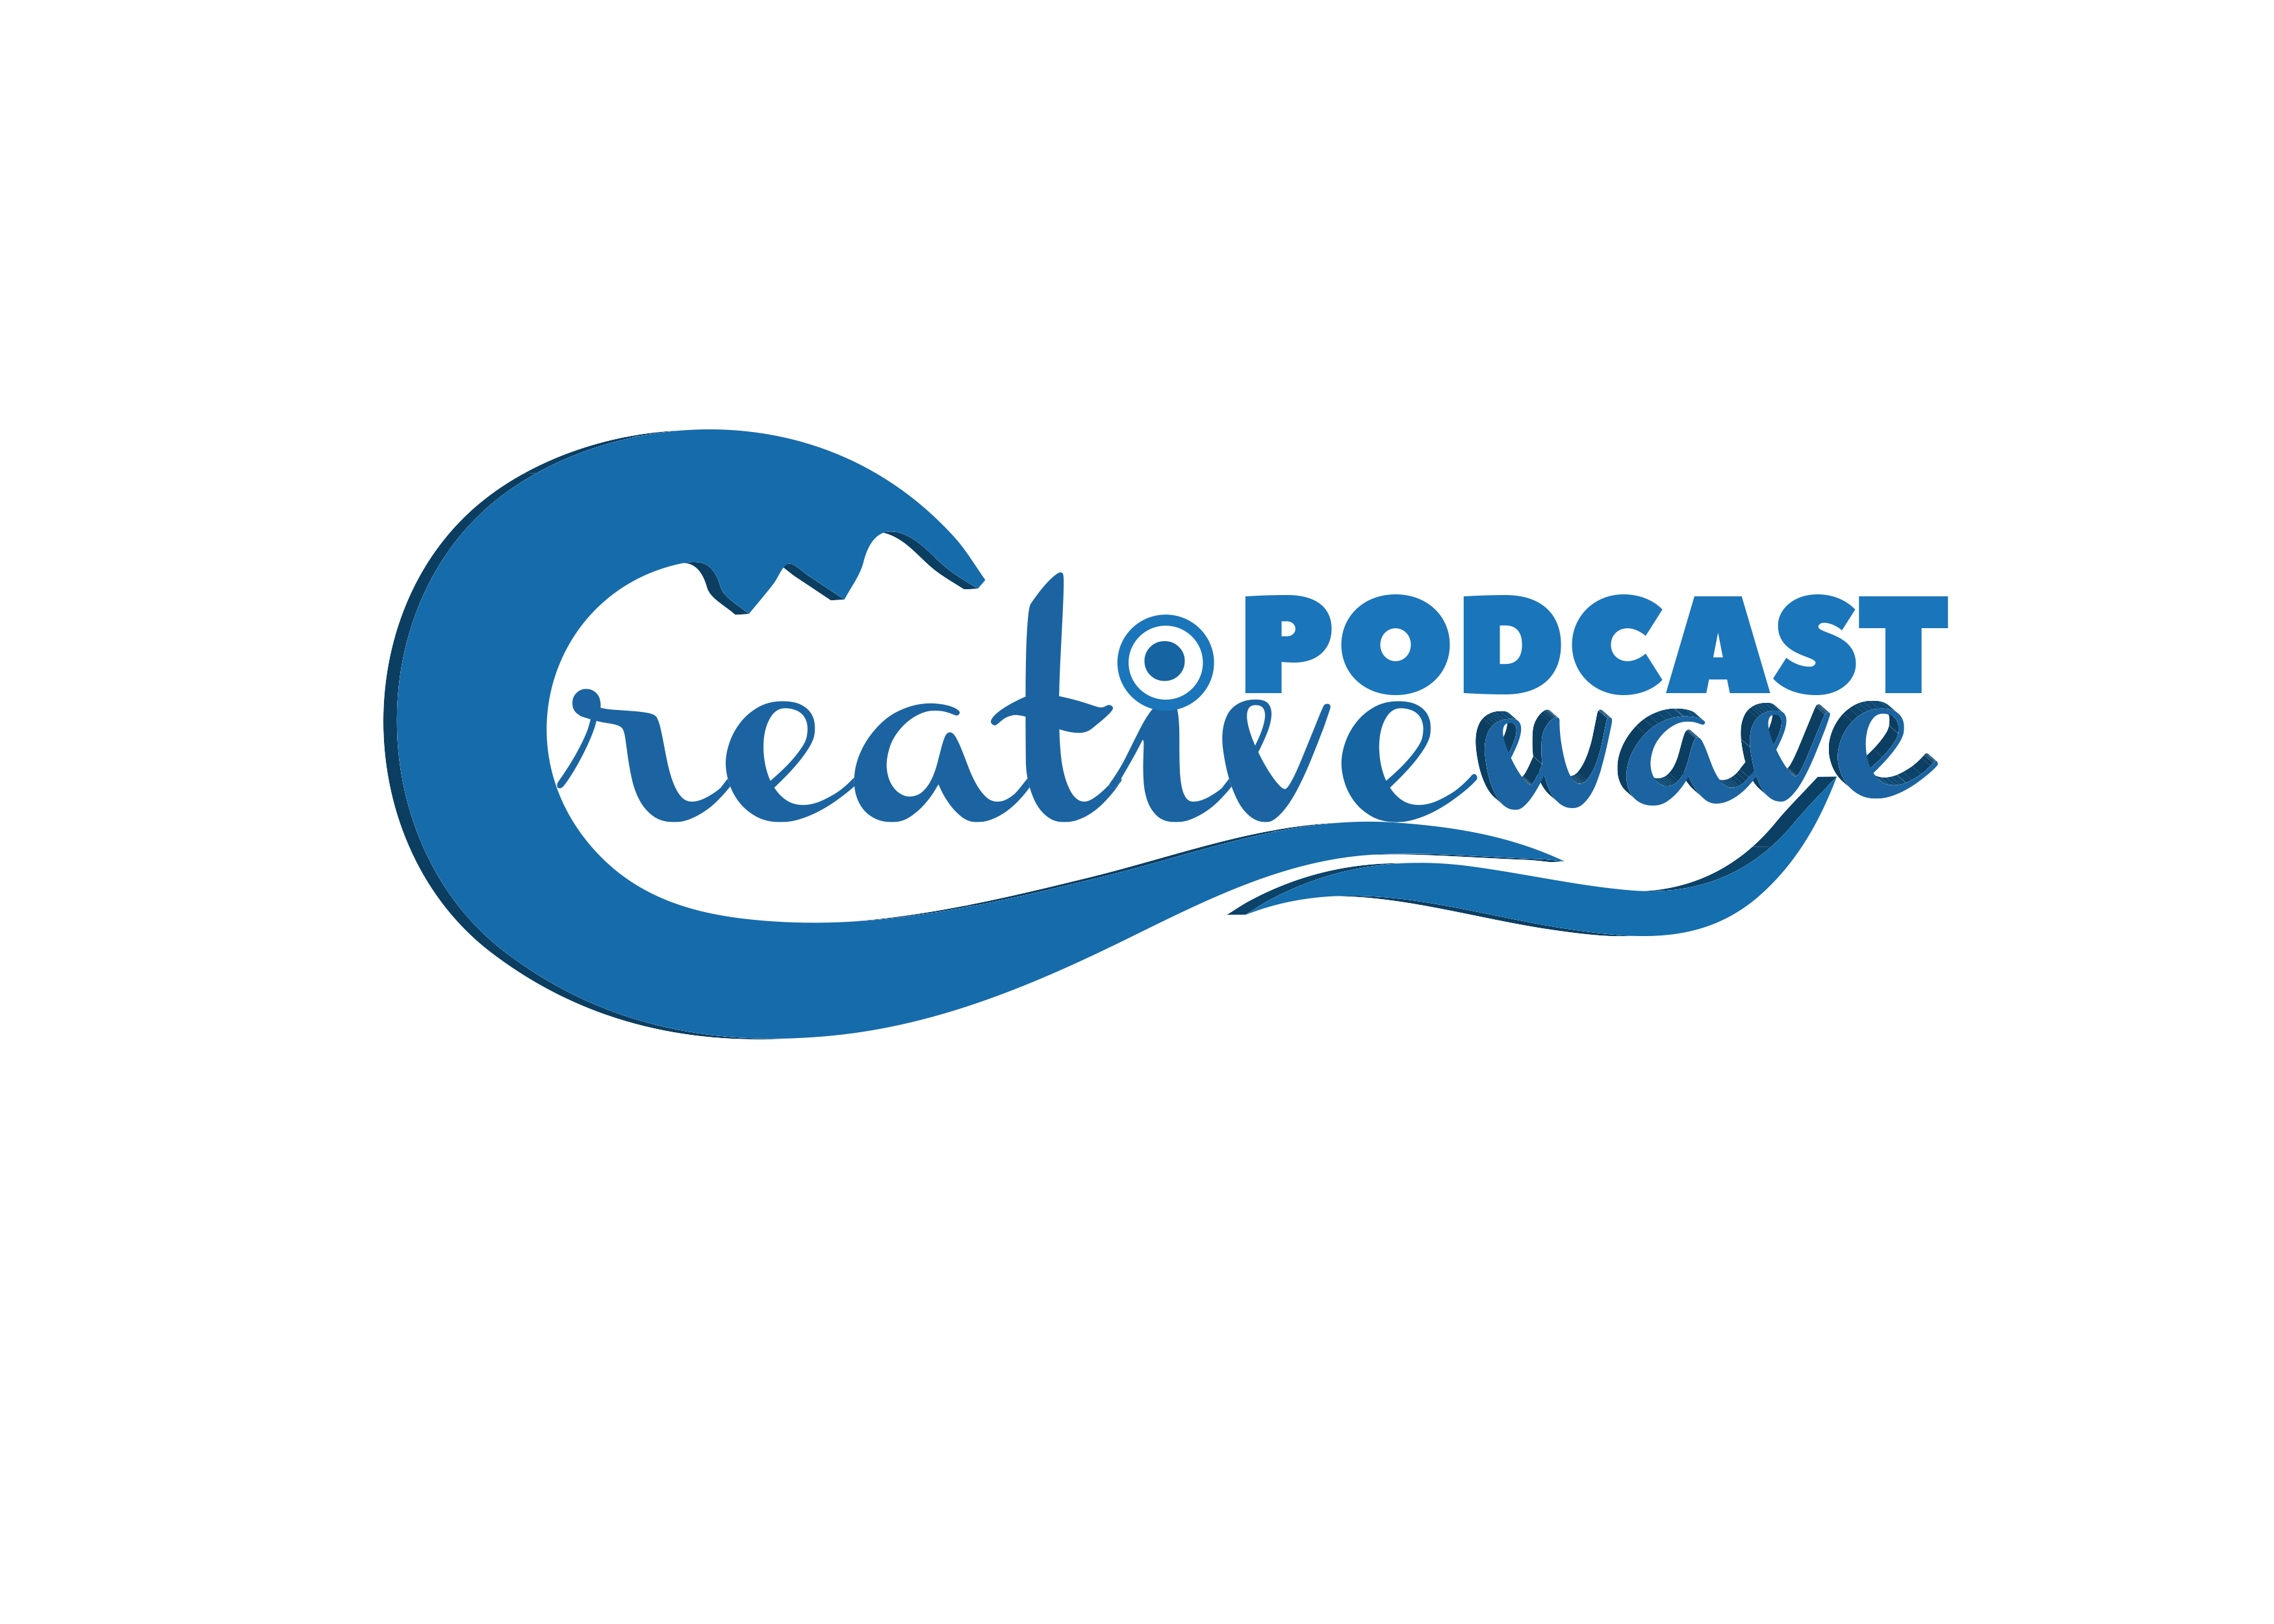 CreativeWave-Episode One